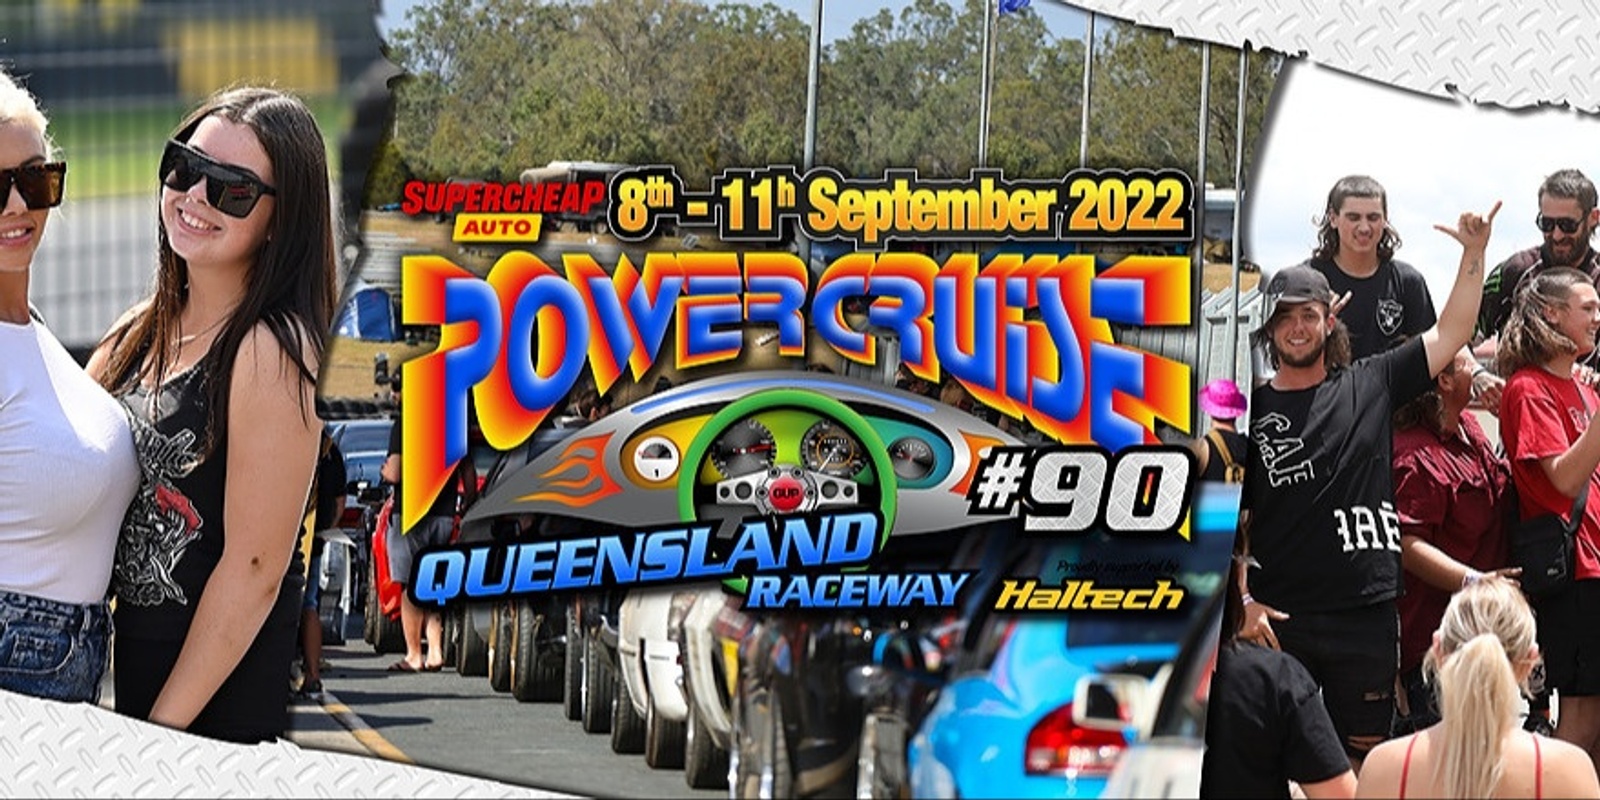 Banner image for Supercheap Auto Powercruise #90 Queensland Raceway, Brisbane QLD 8th - 11th September 2022